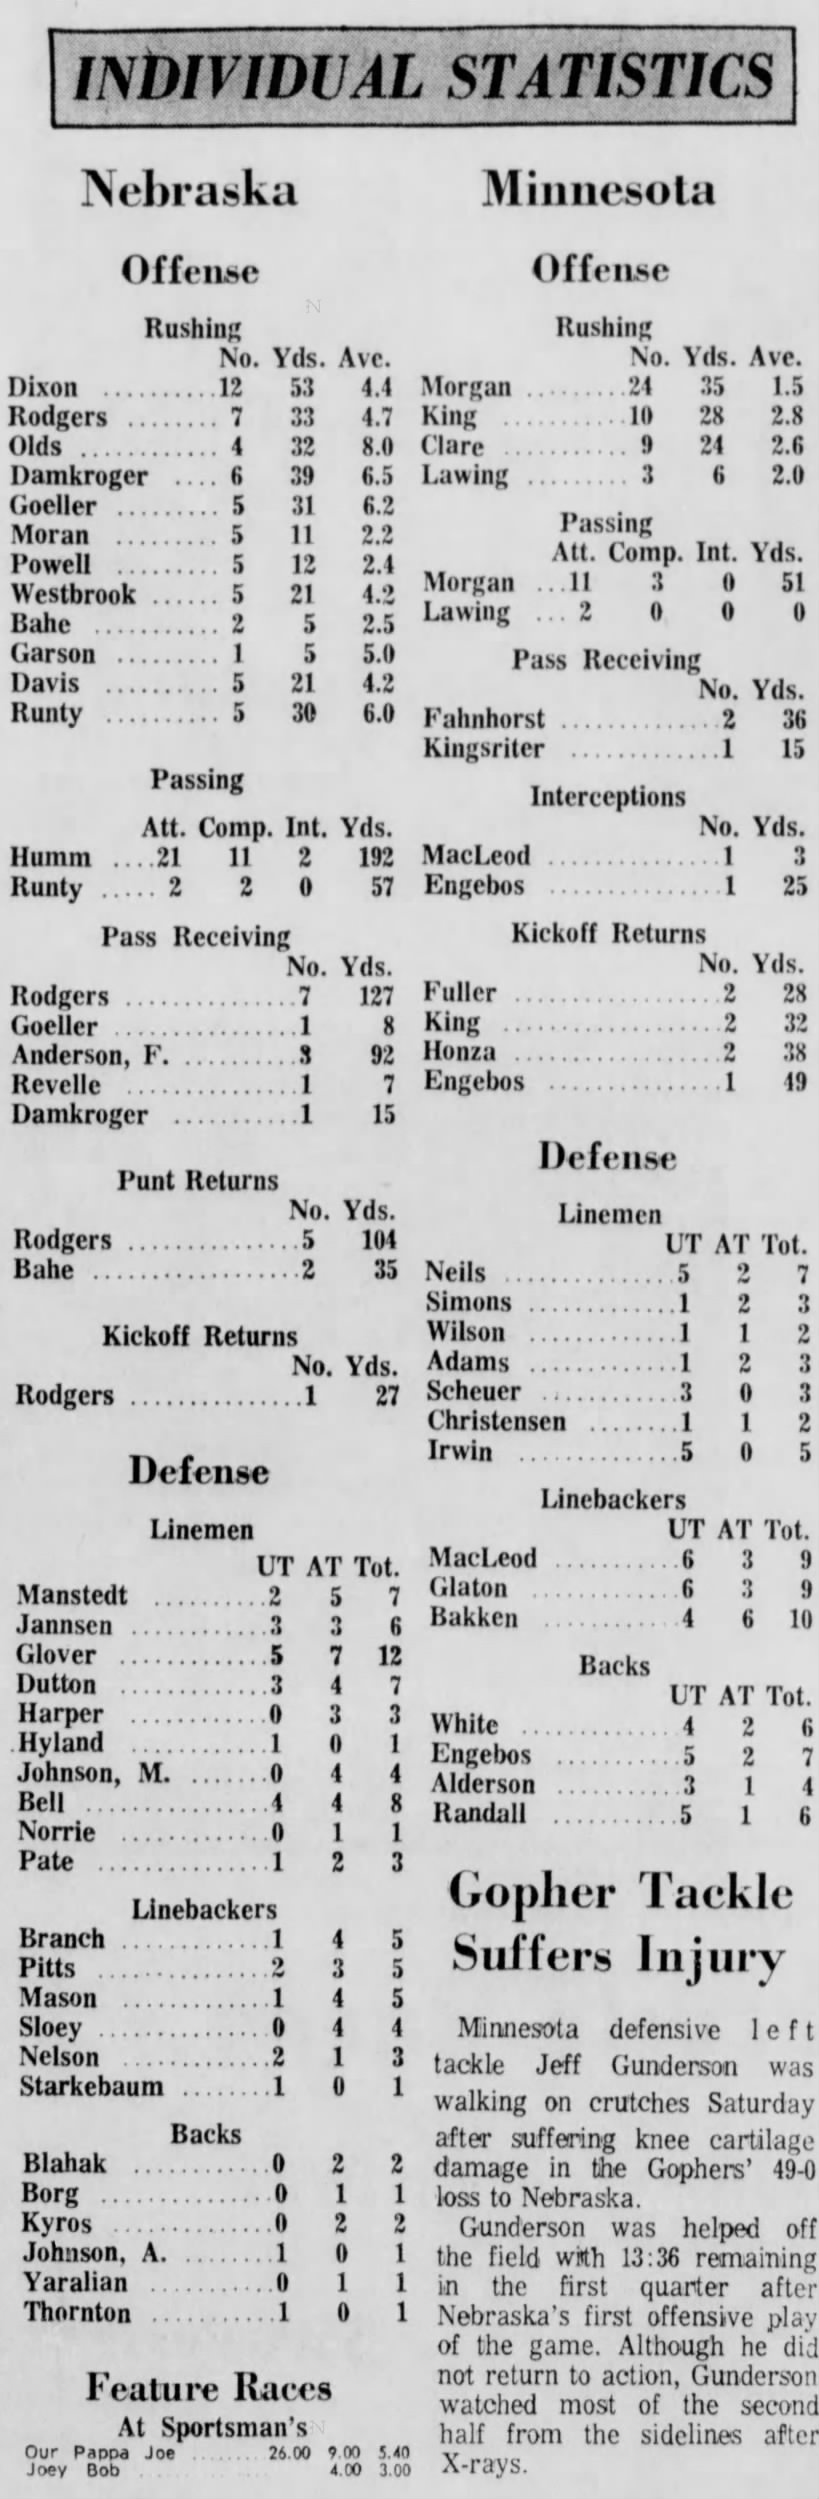 1972 Nebraska-Minnesota individual stats